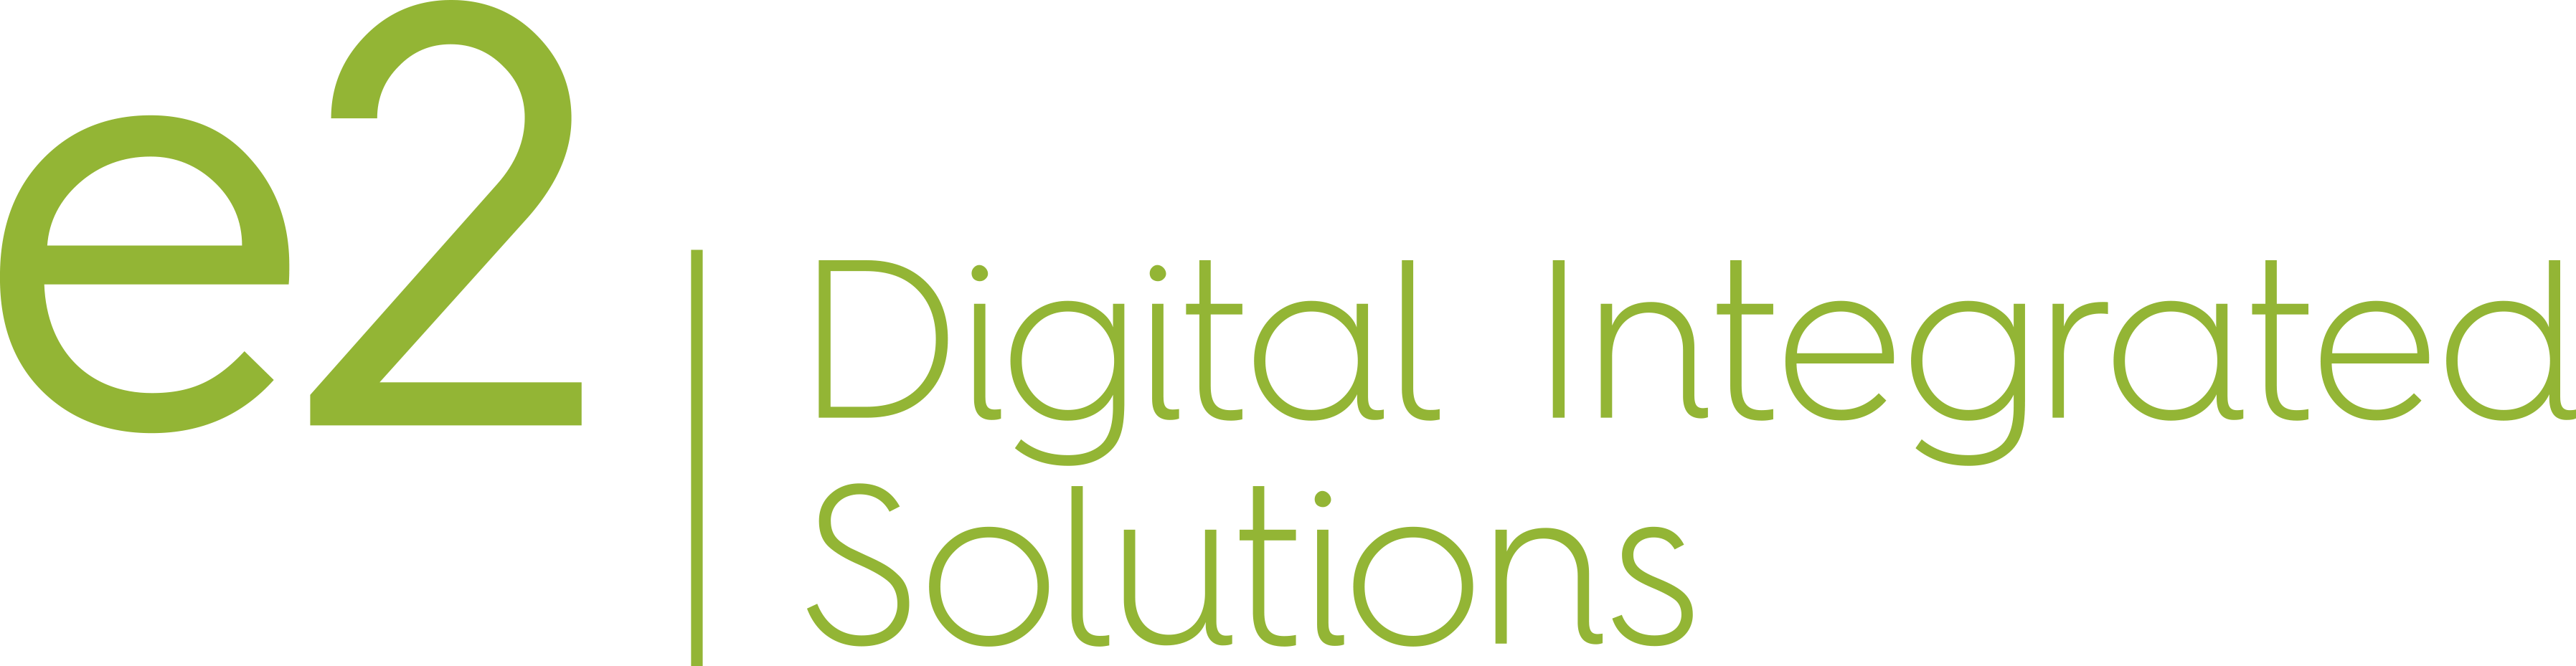 E2 Digital Integrated Solutions